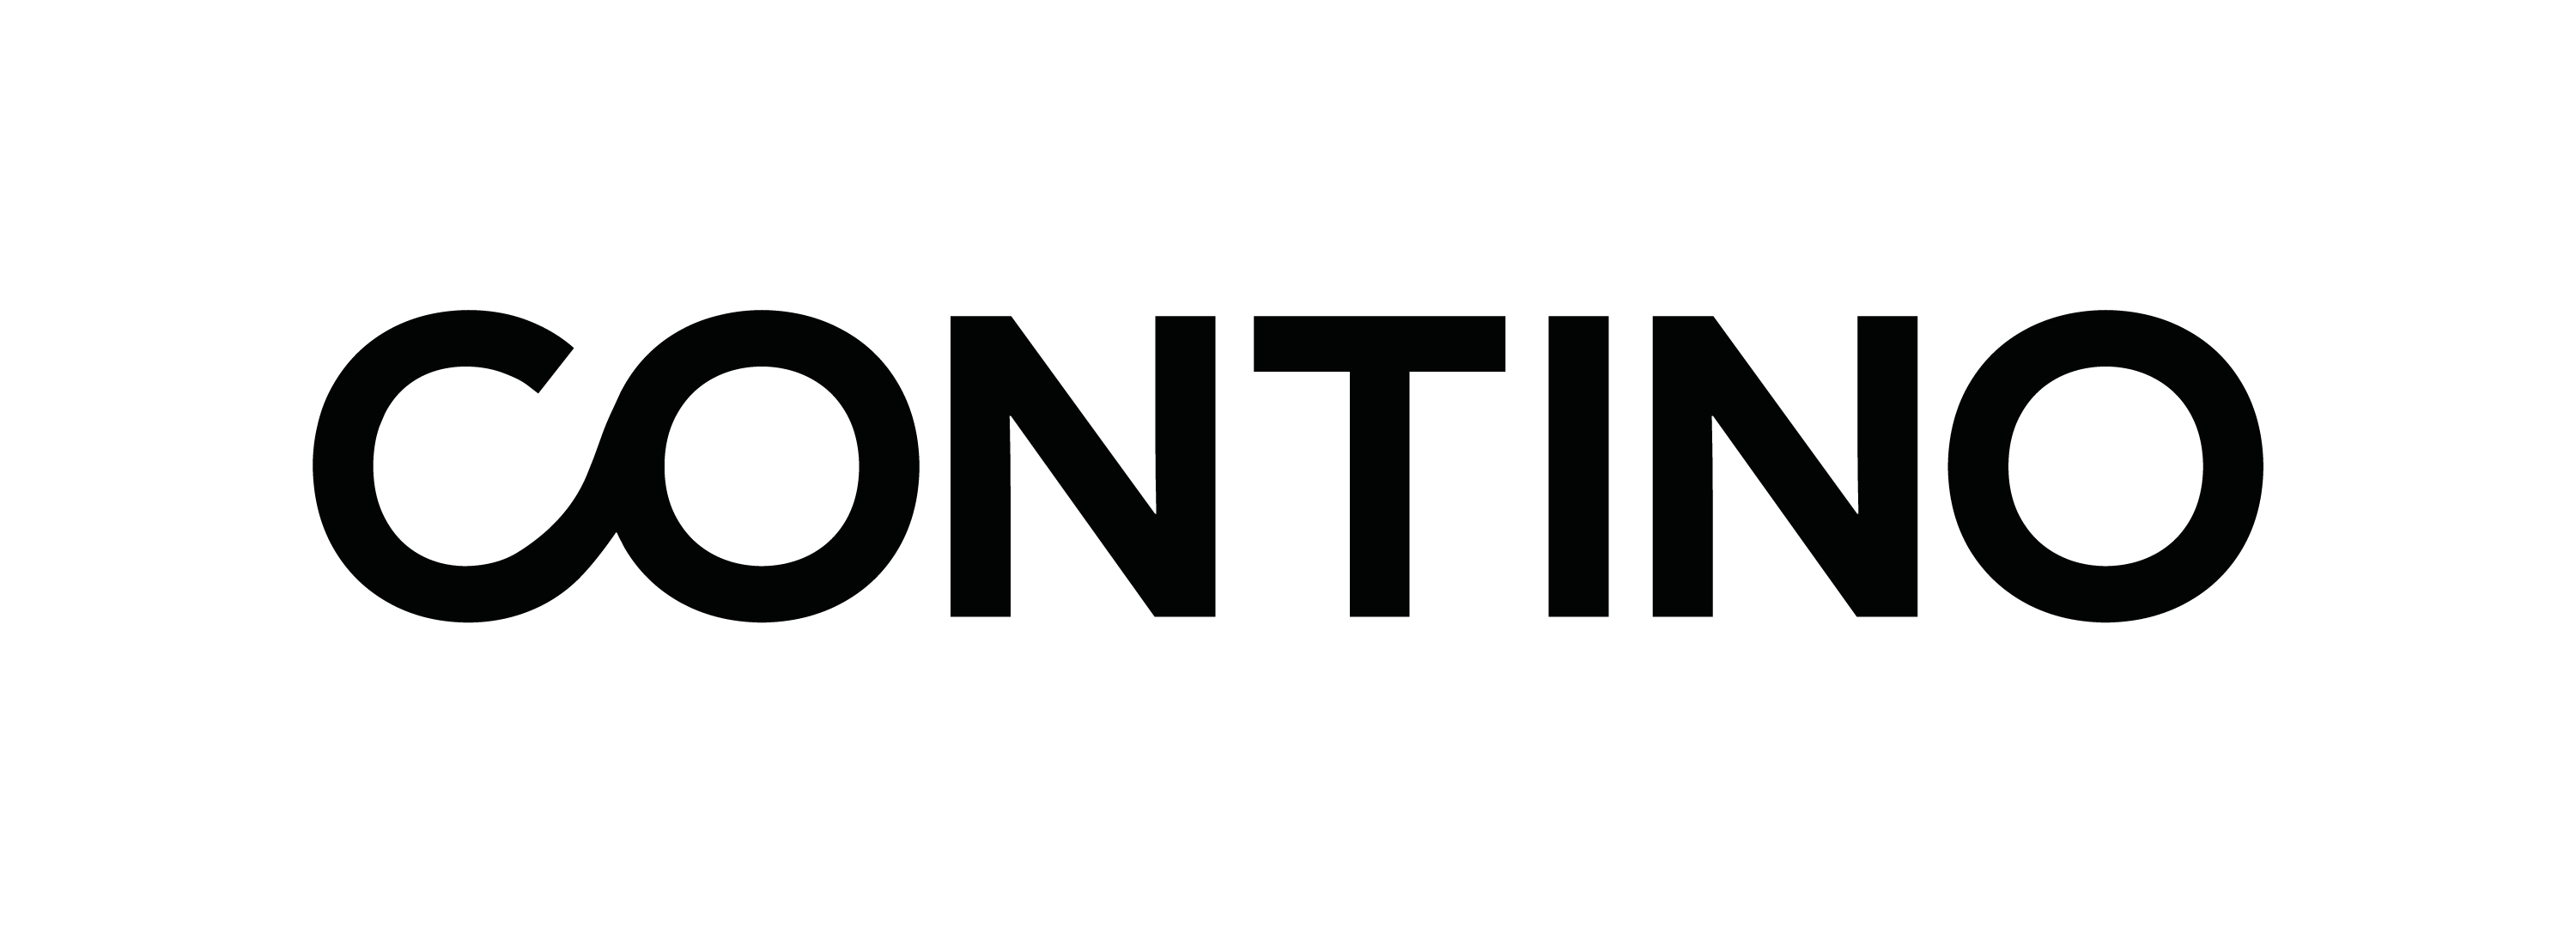 Contino_Logo_Black_PRINT